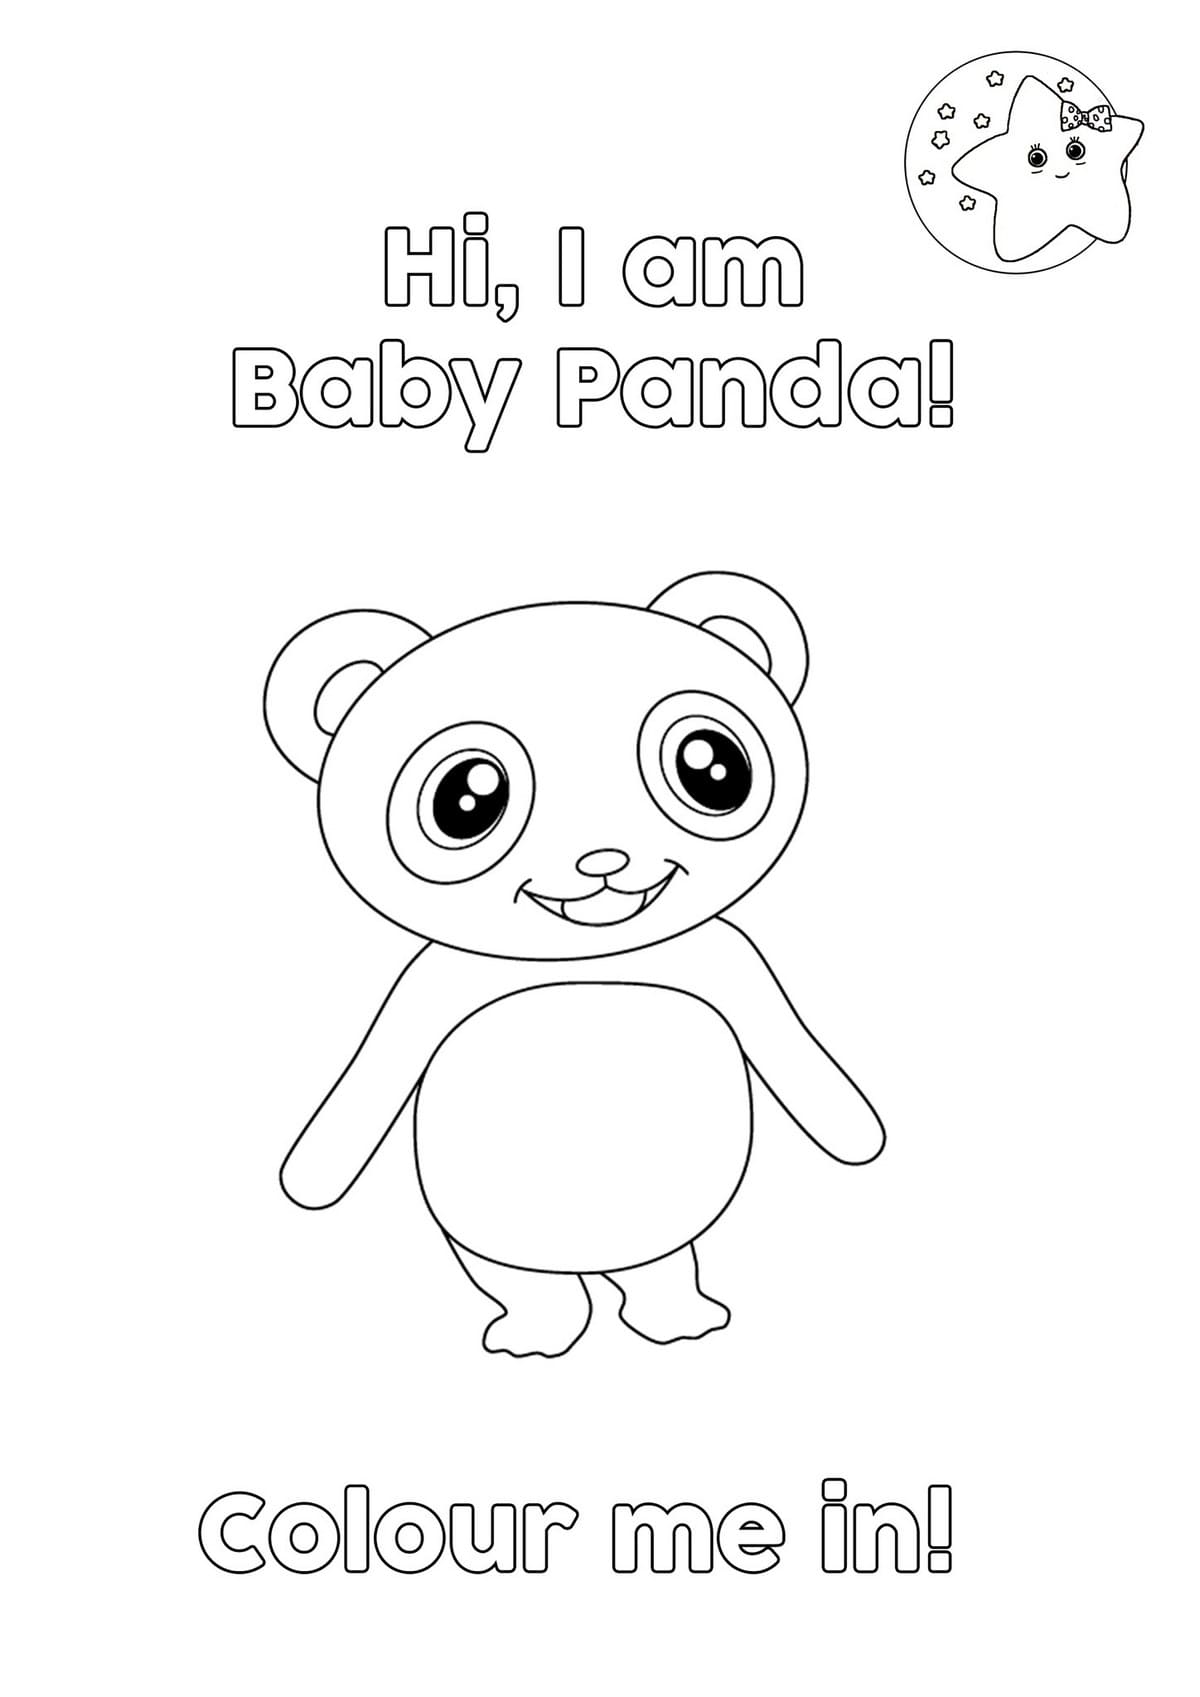 Para Colorear Little Baby Bum Baby Panda